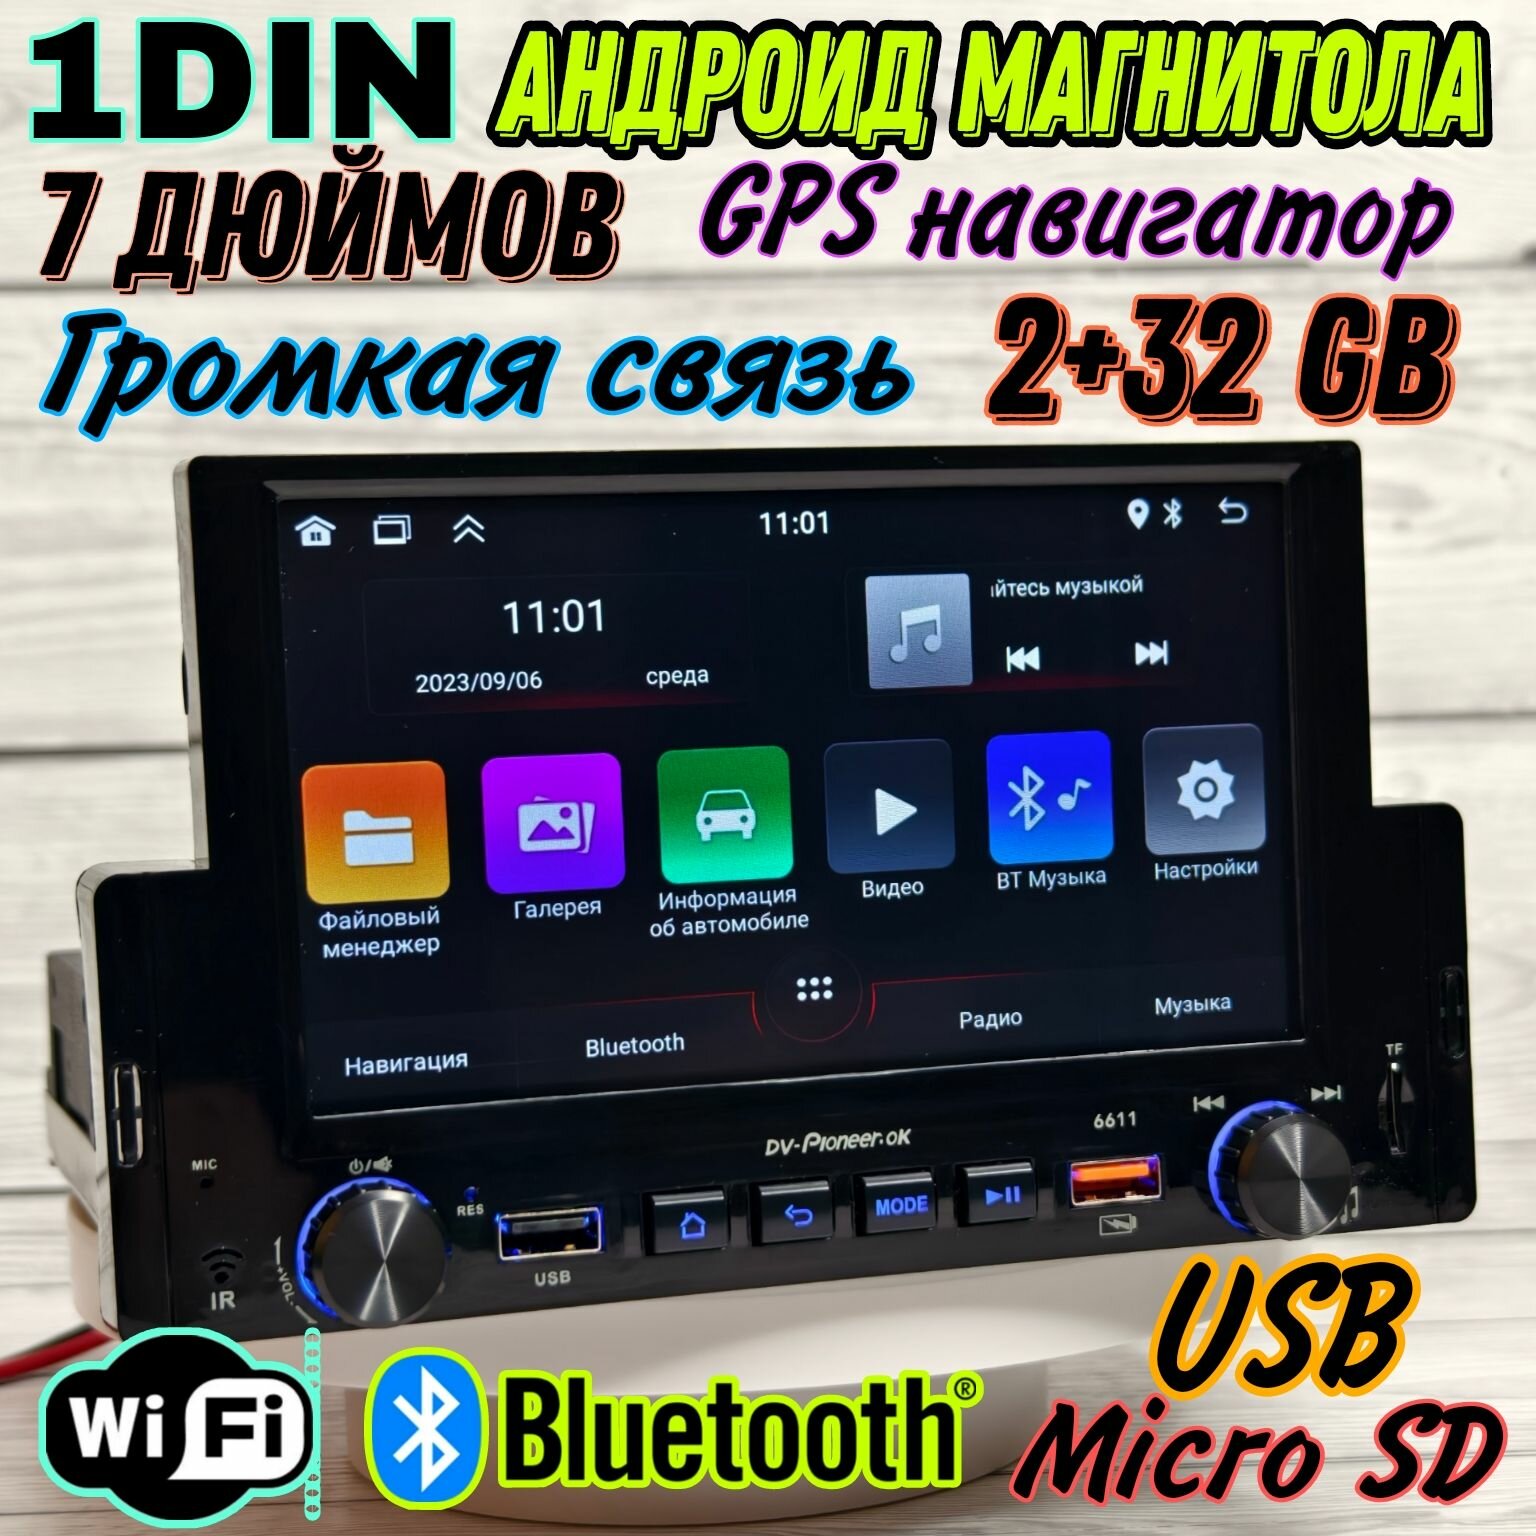 Андроид Автомагнитола 1DIN 7 дюймов 2/32 GB, GPS навигатор, Wi-Fi, Bluetooth